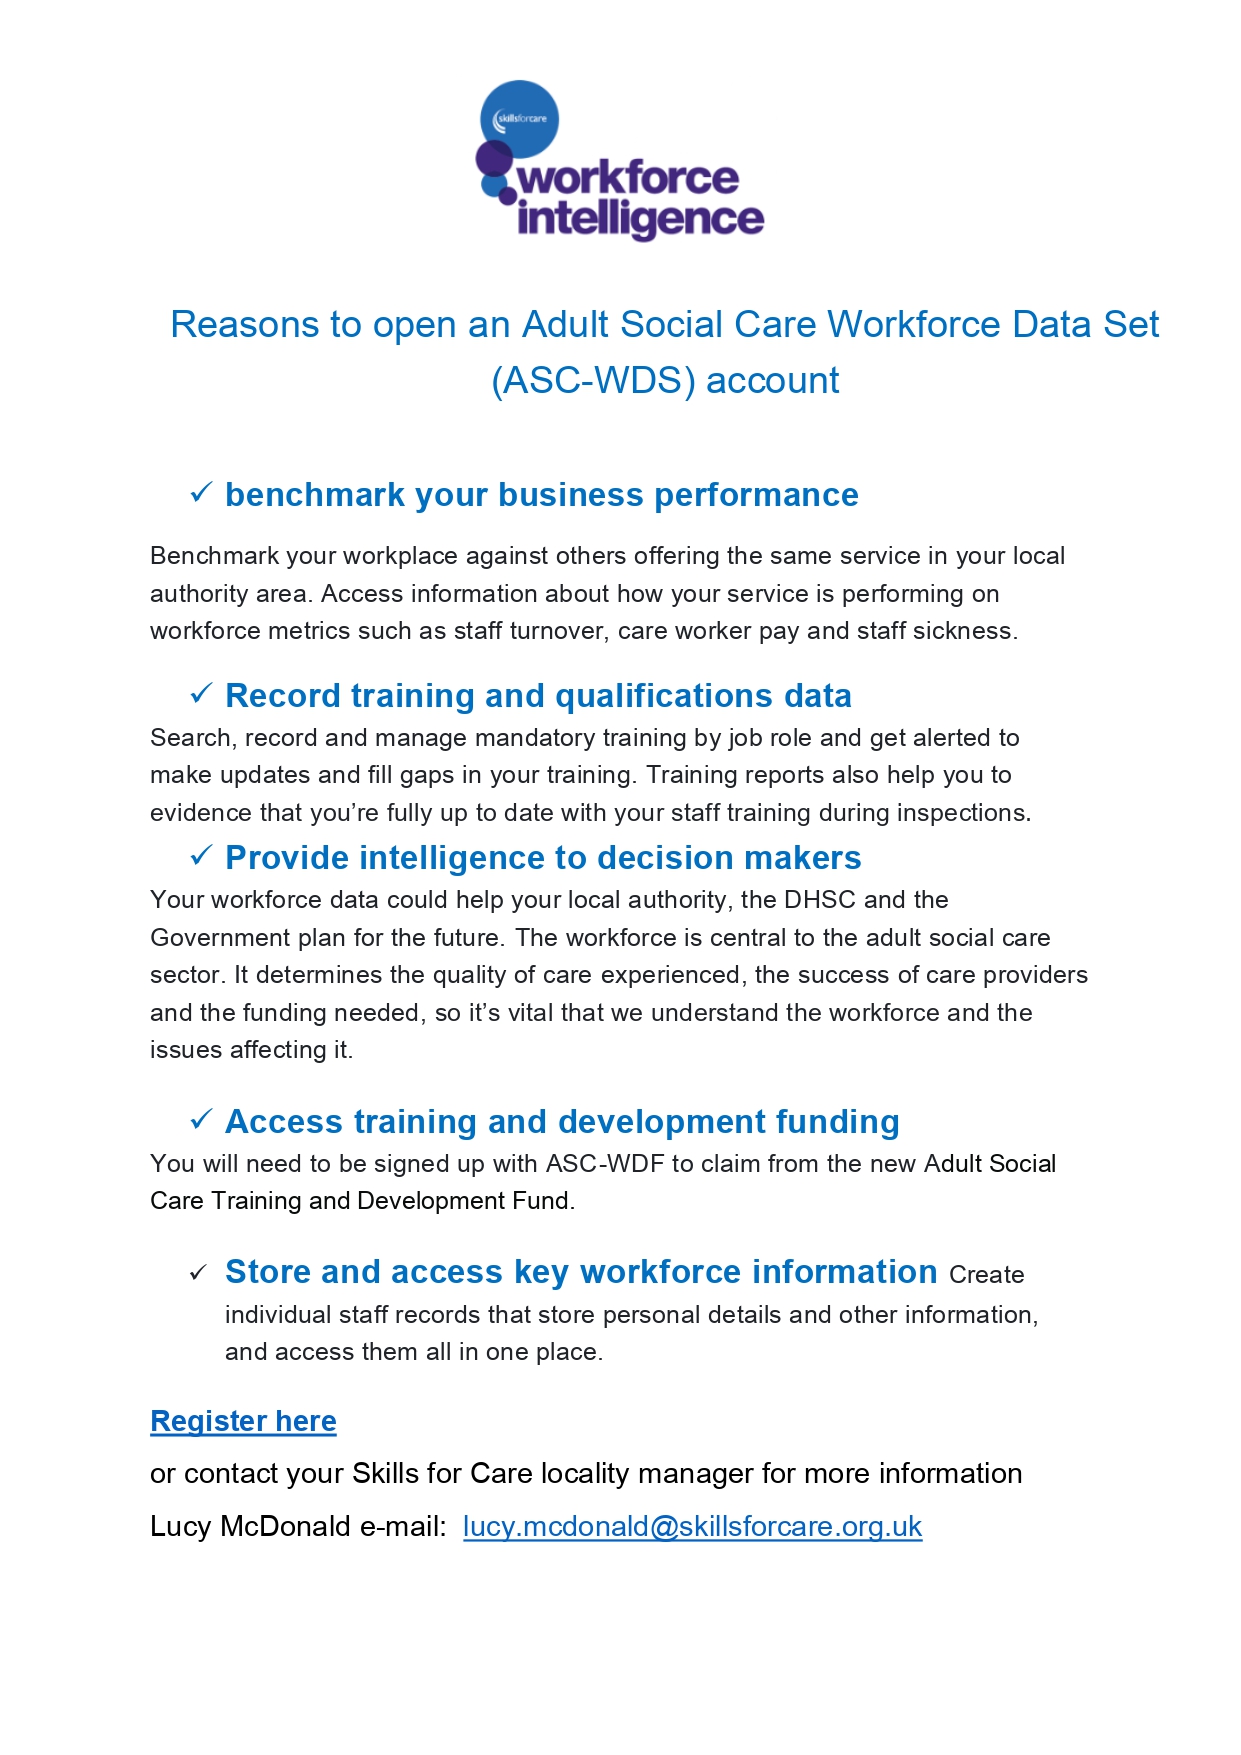 Adult Social Care Workforce Data Set (ASC-WDS)